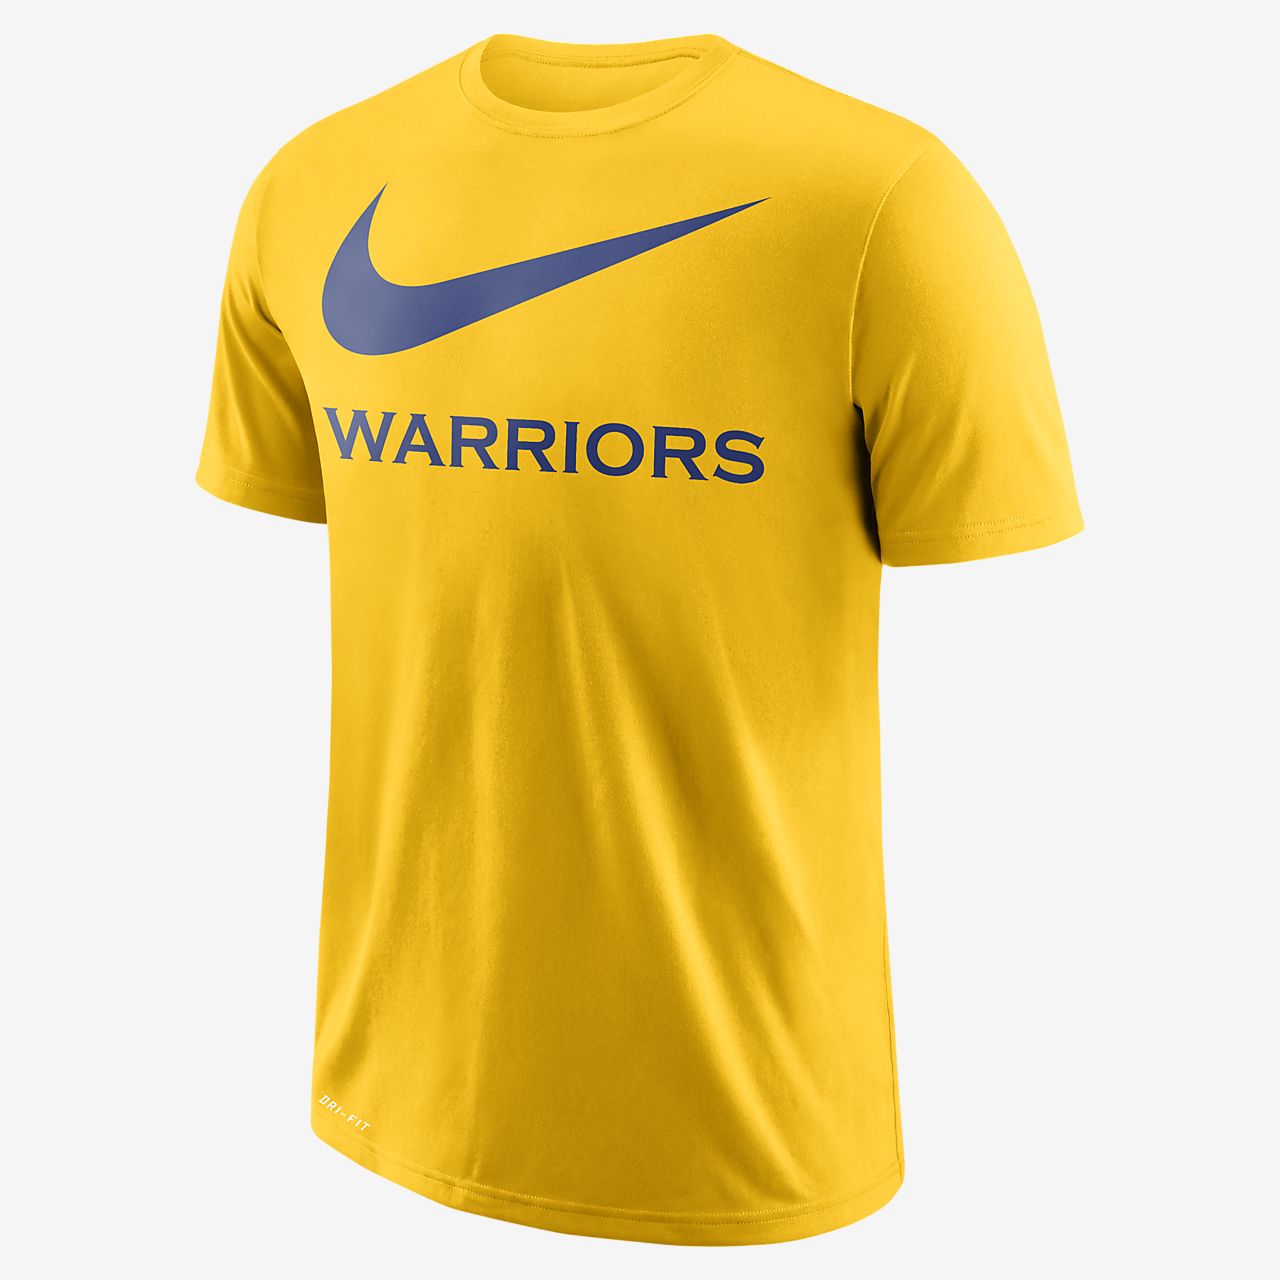 nike warriors shirt